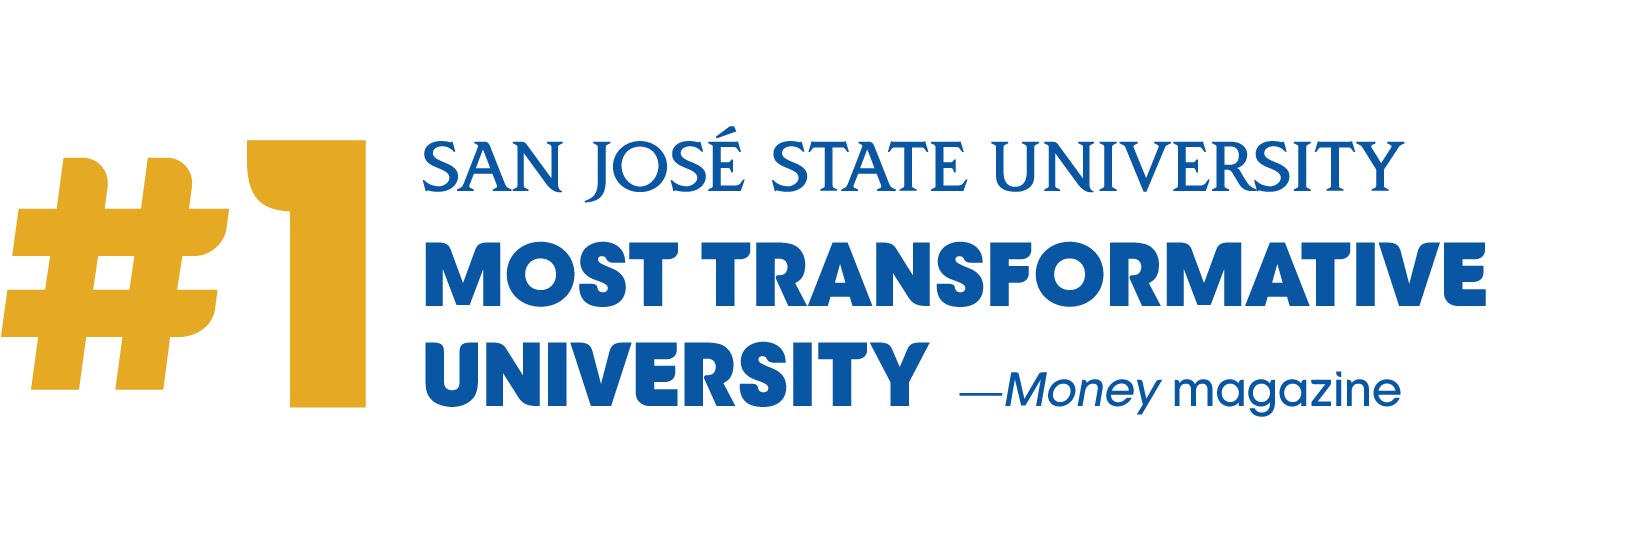 #1 Most Transformative University - Money Magazine